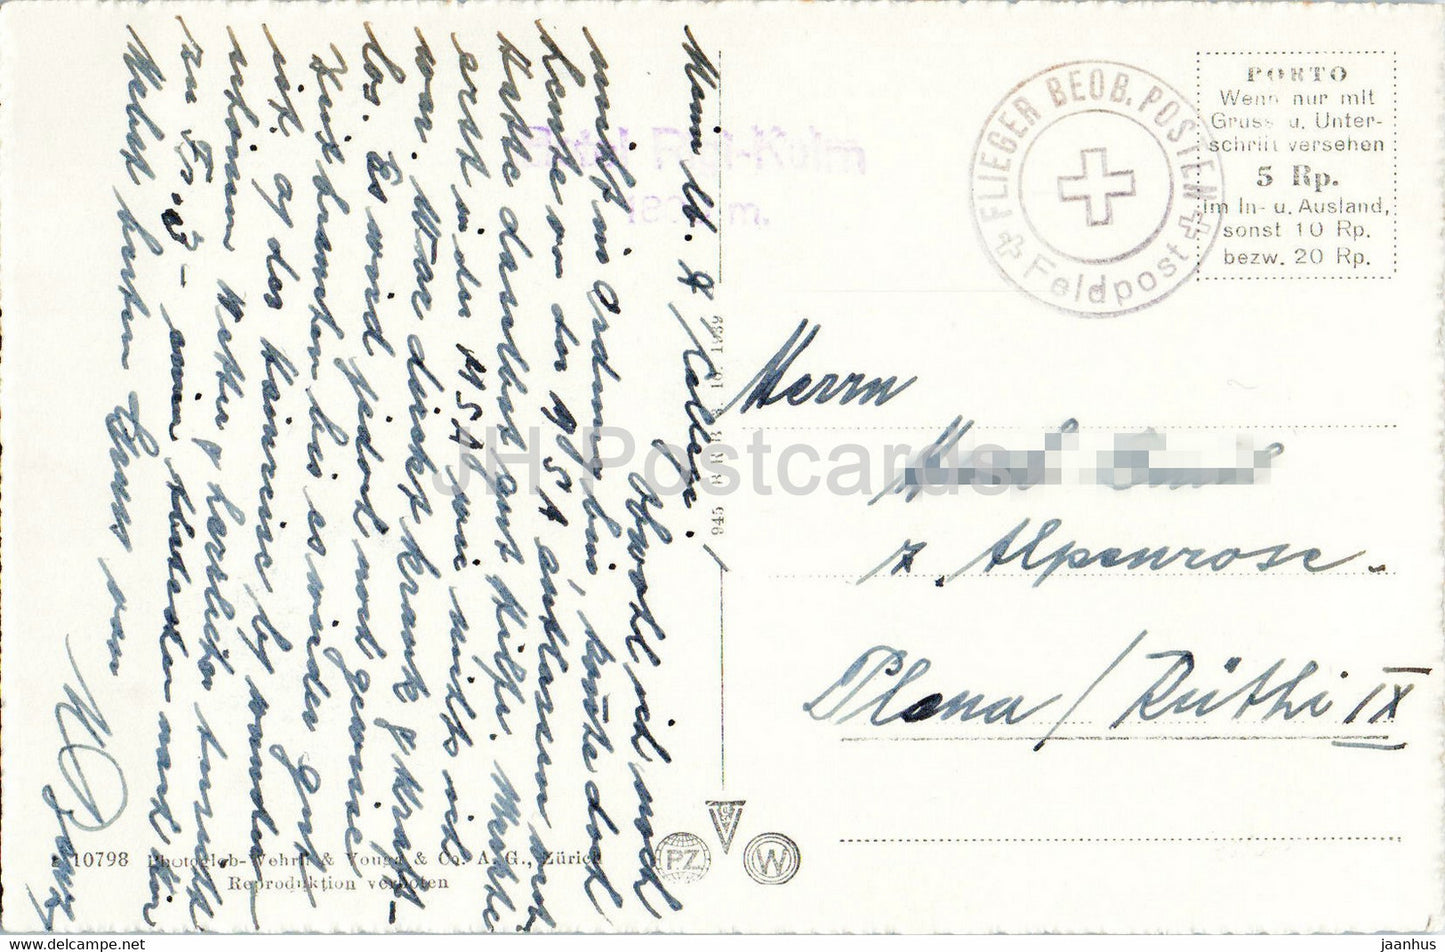 Rigi Staffel und Kulm mit Pilatus - Zugersee - train - Feldpost - military mail - old postcard - Switzerland - used